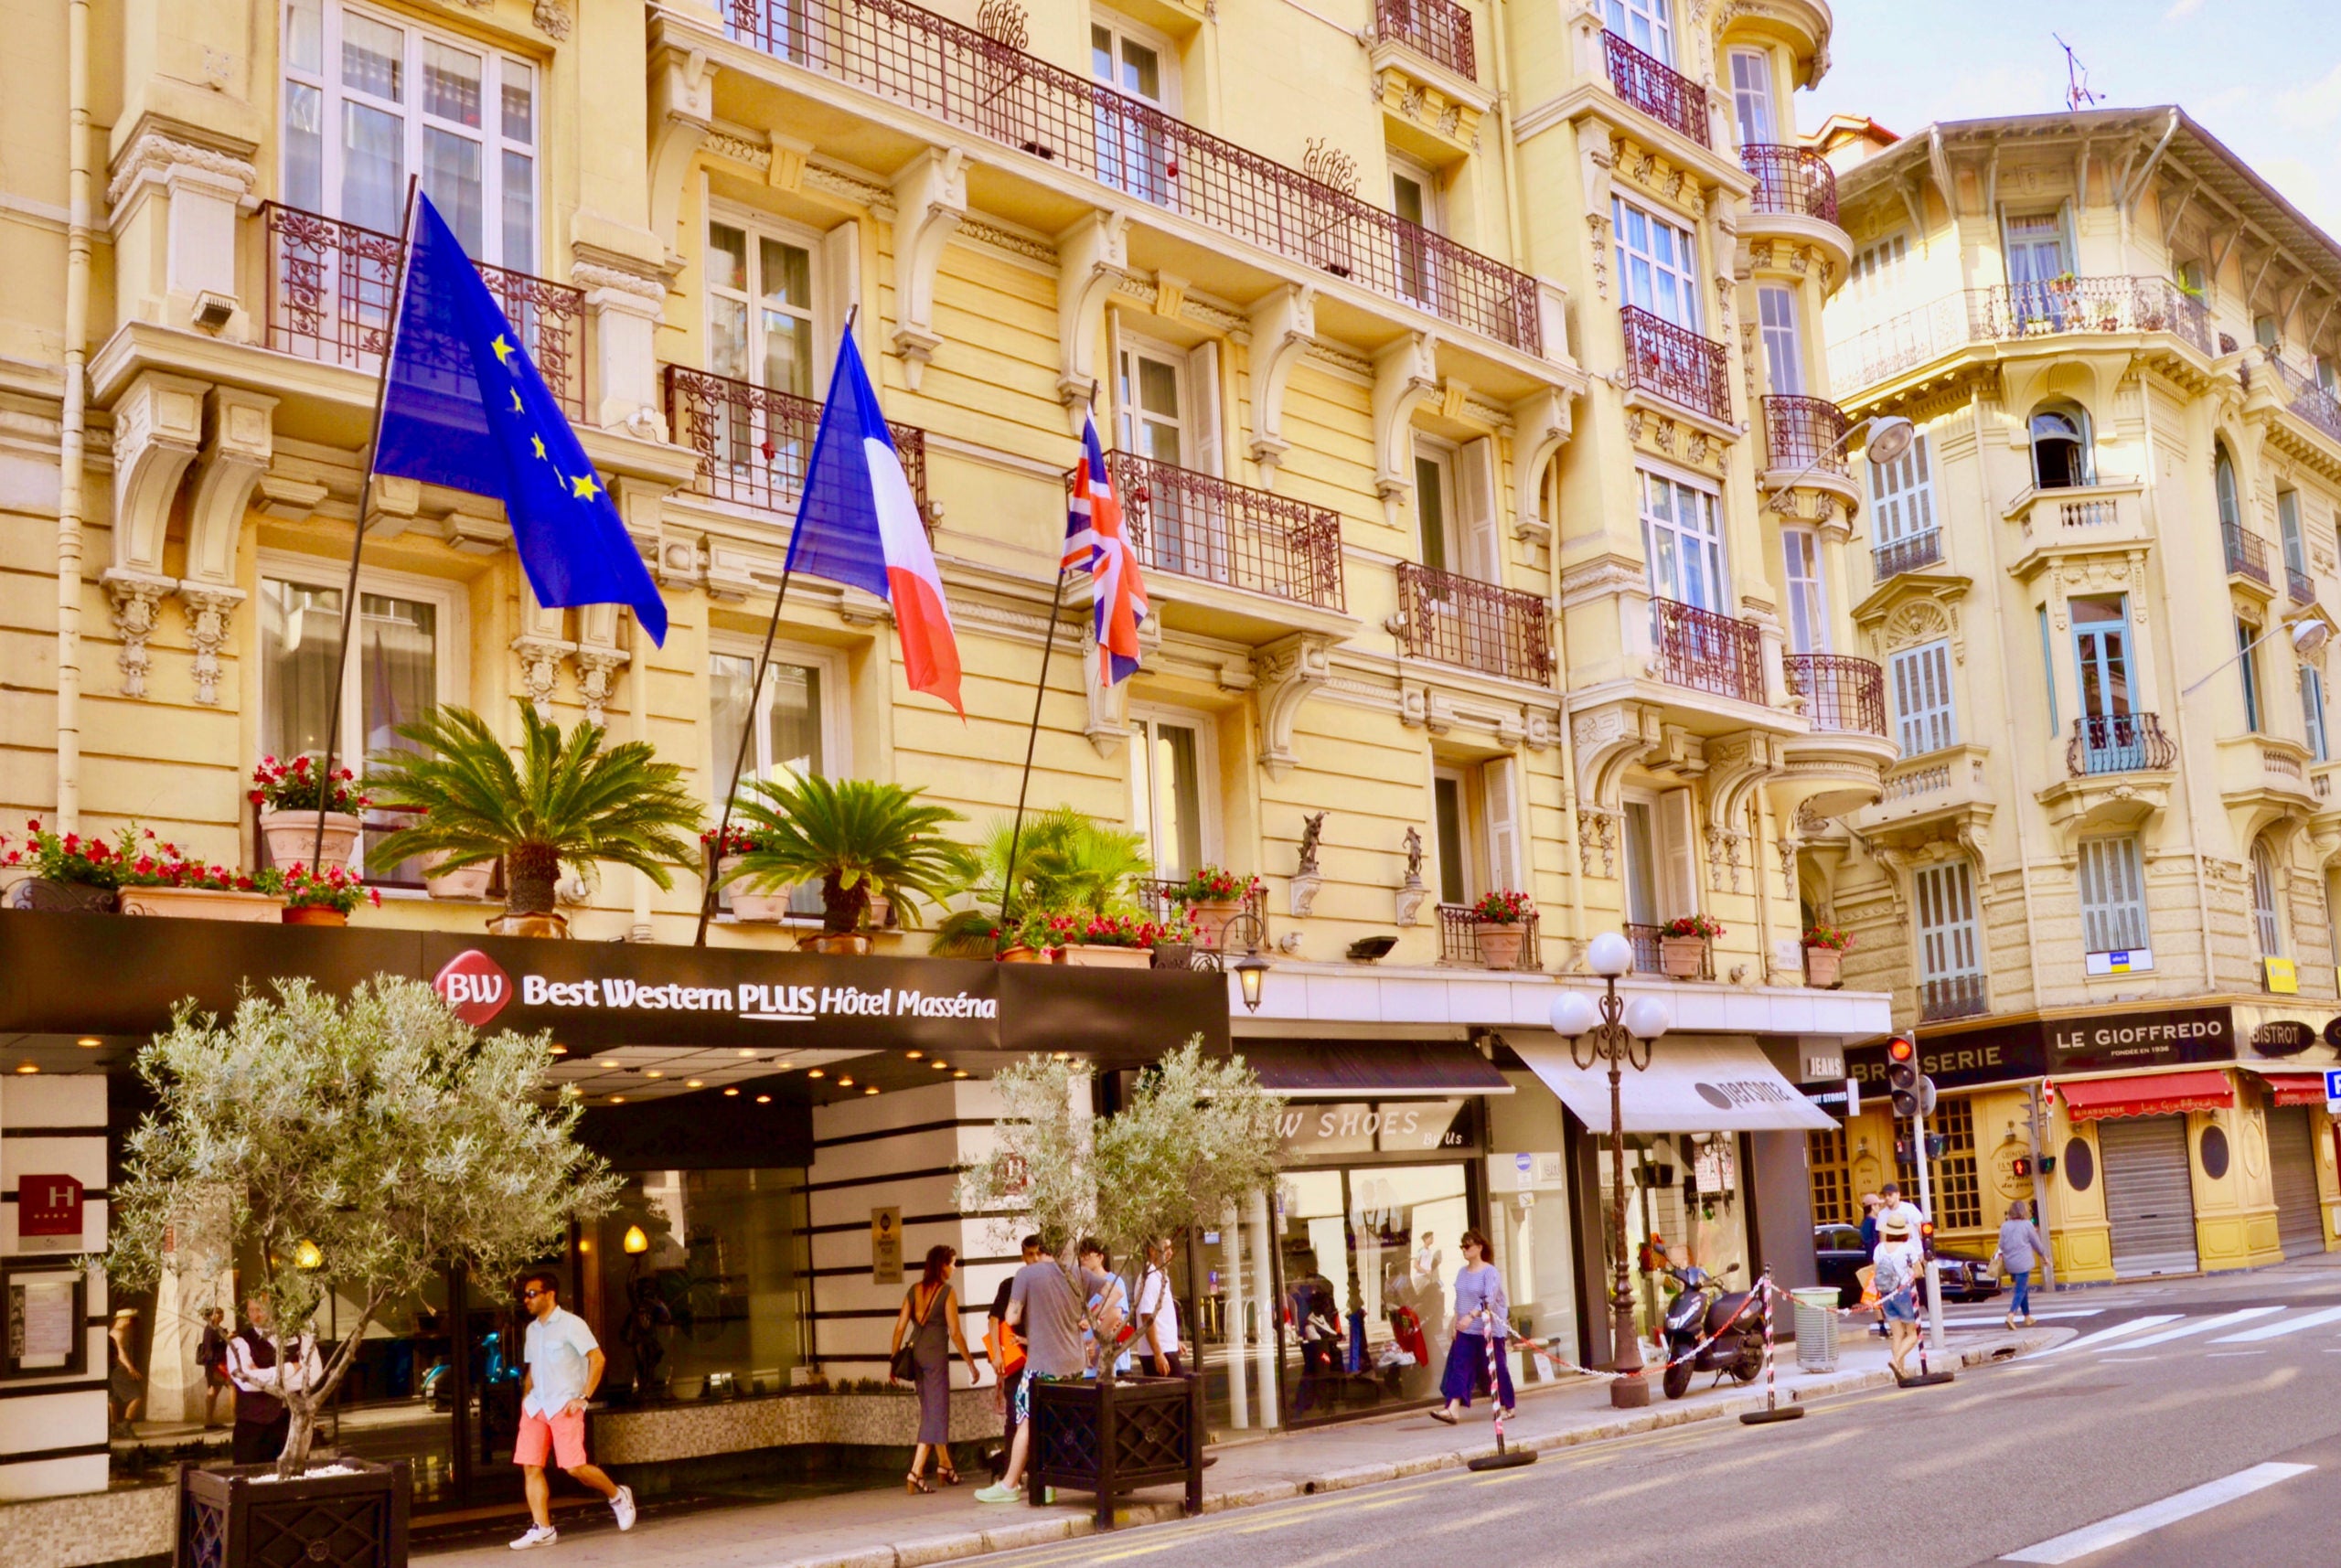 Best Western Hotel, Massena, Nice, France, Europe